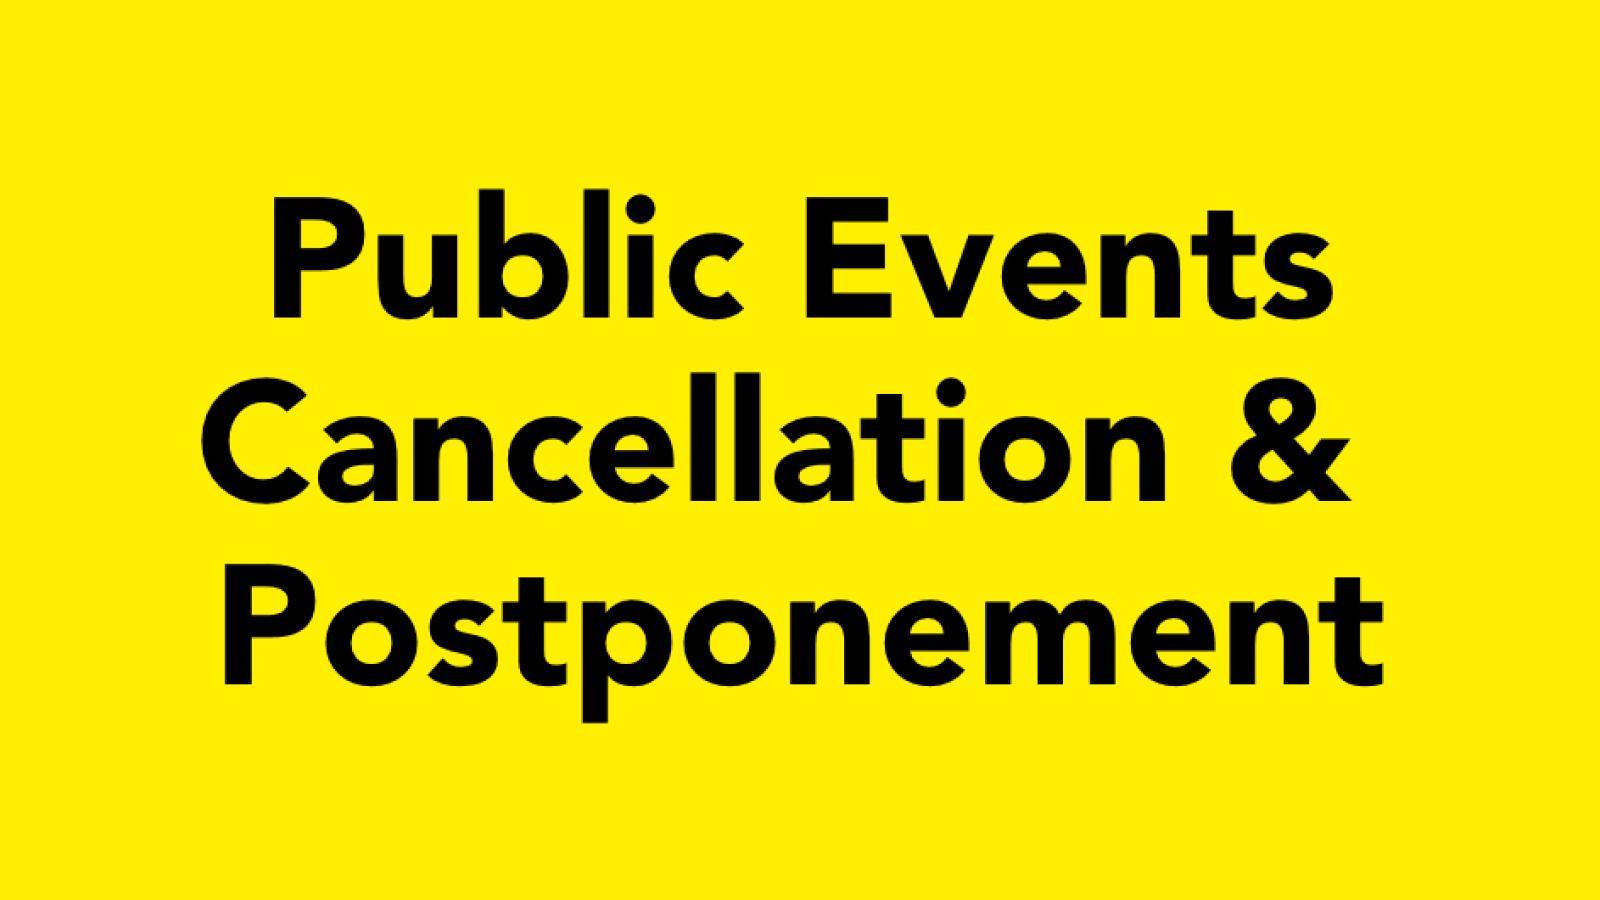 Public Events Cancellation & Postponement